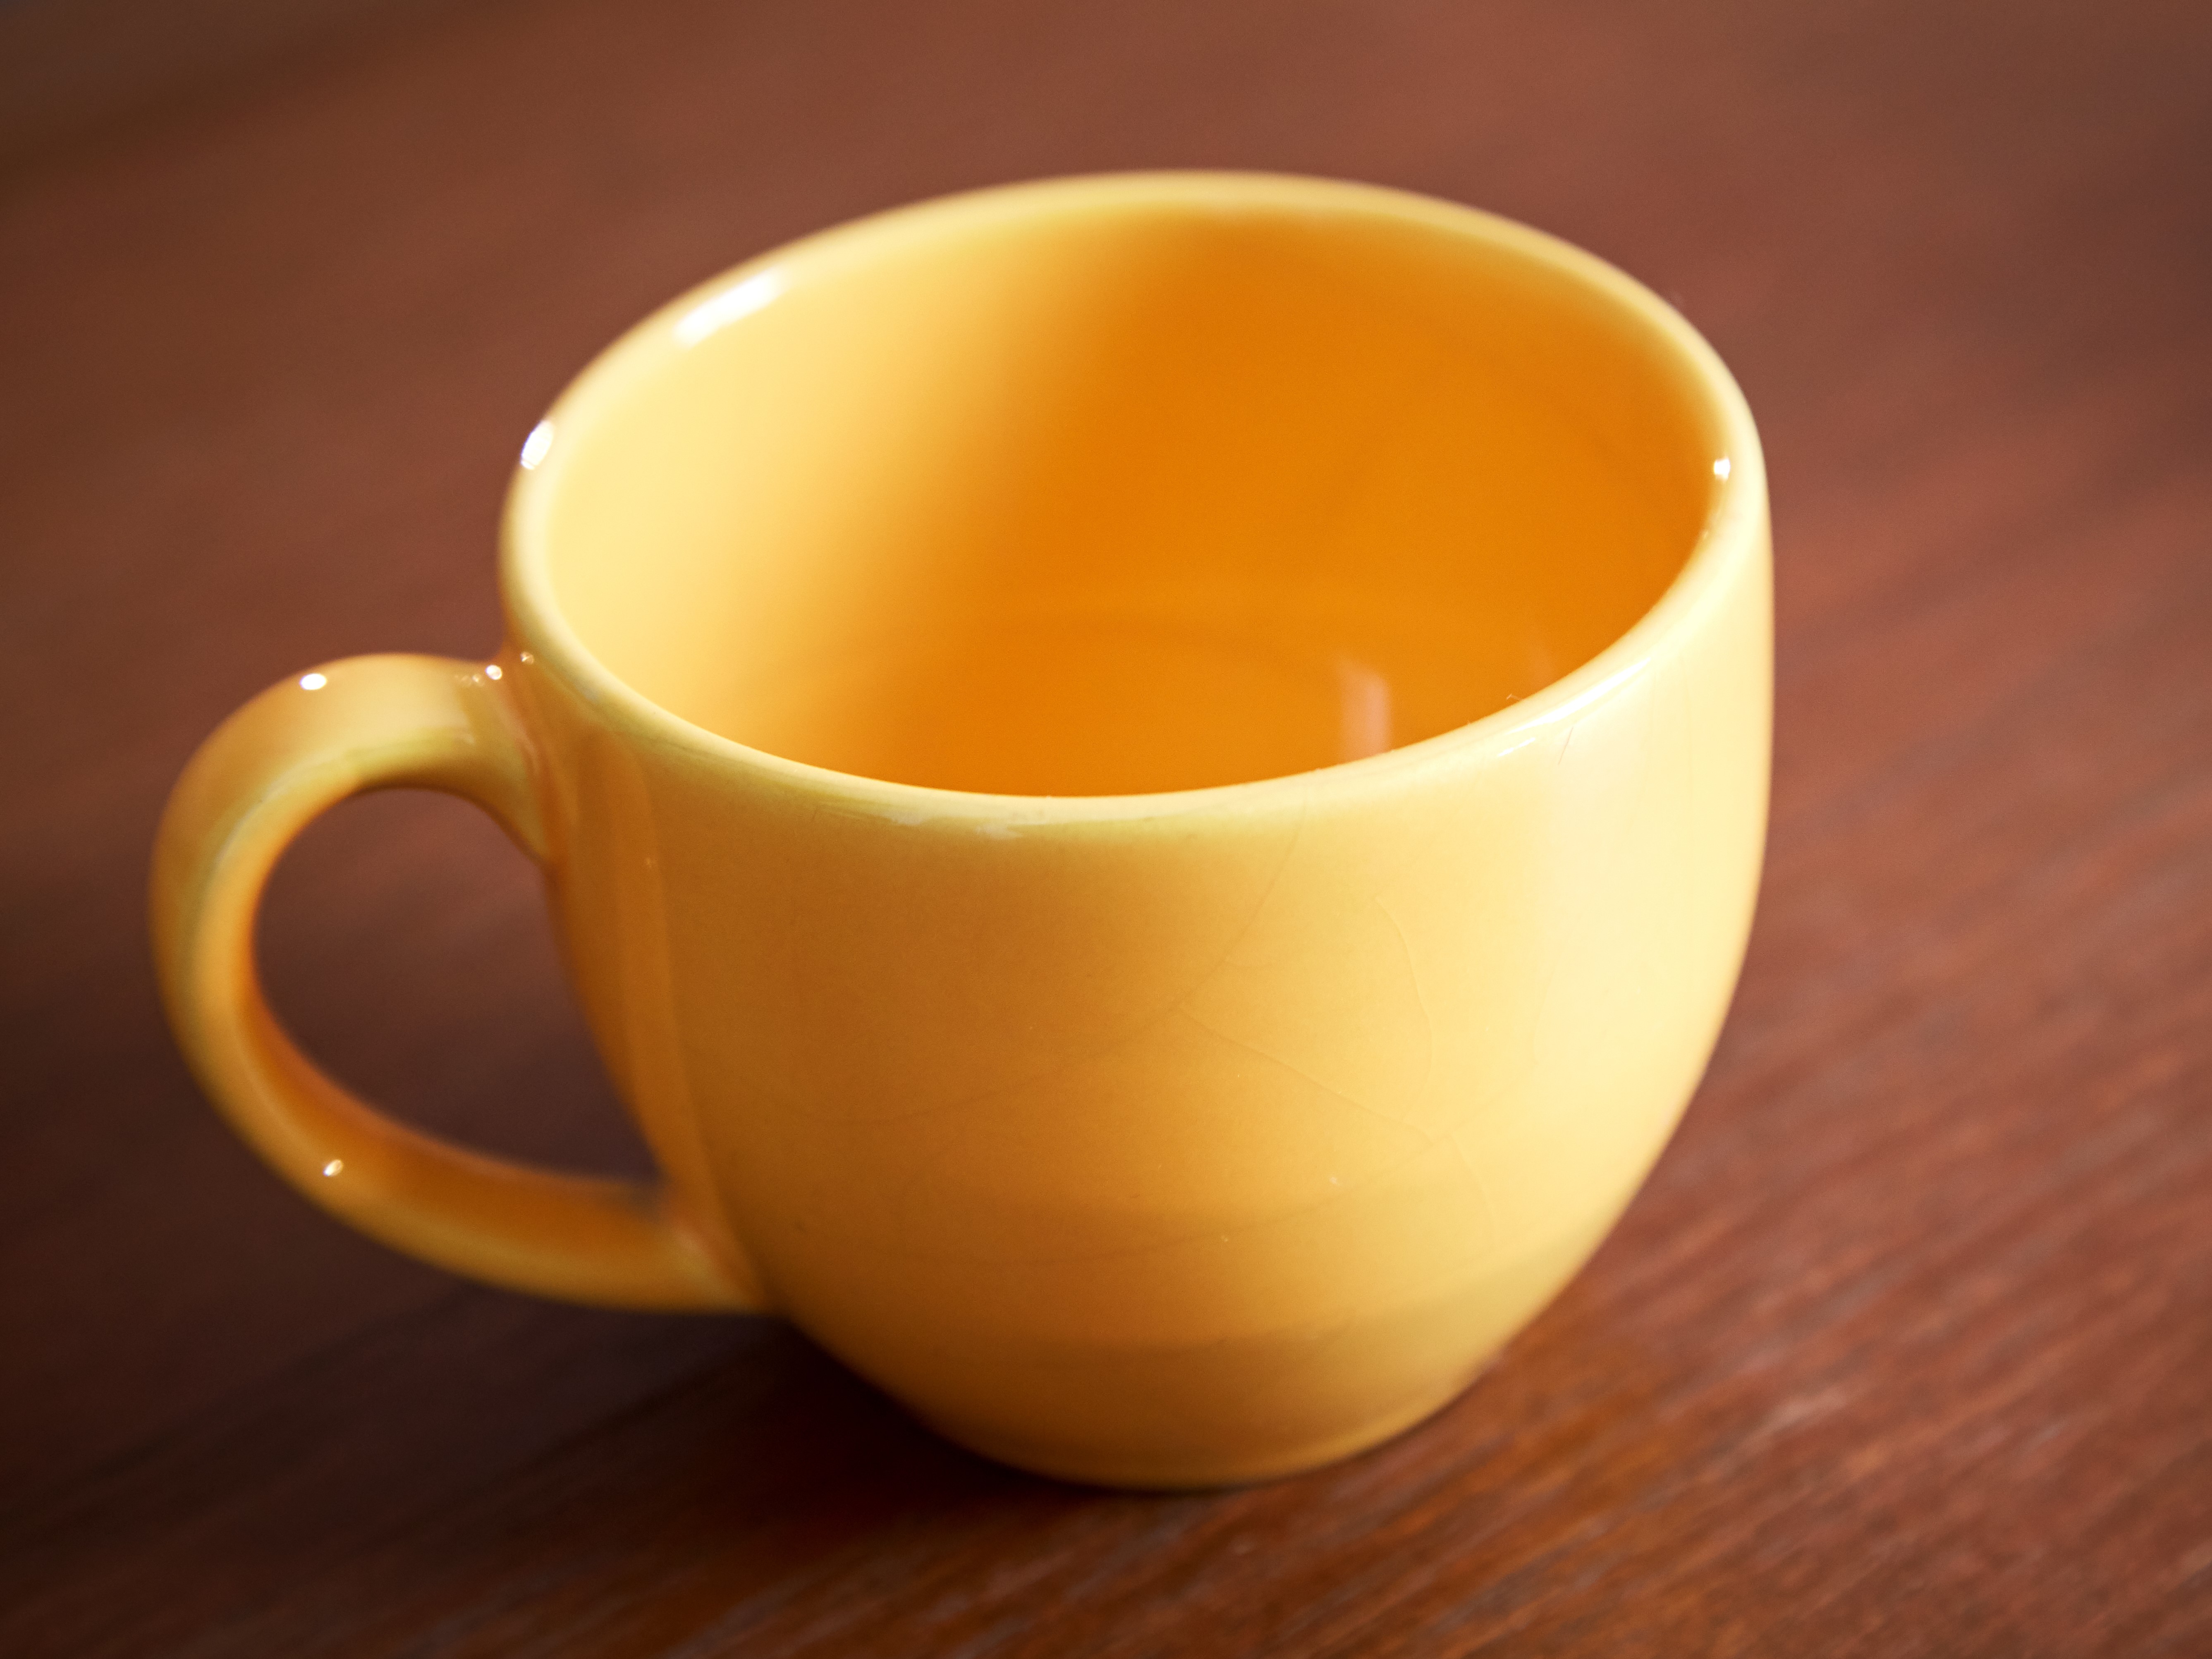 yellow ceramic mug on wood table